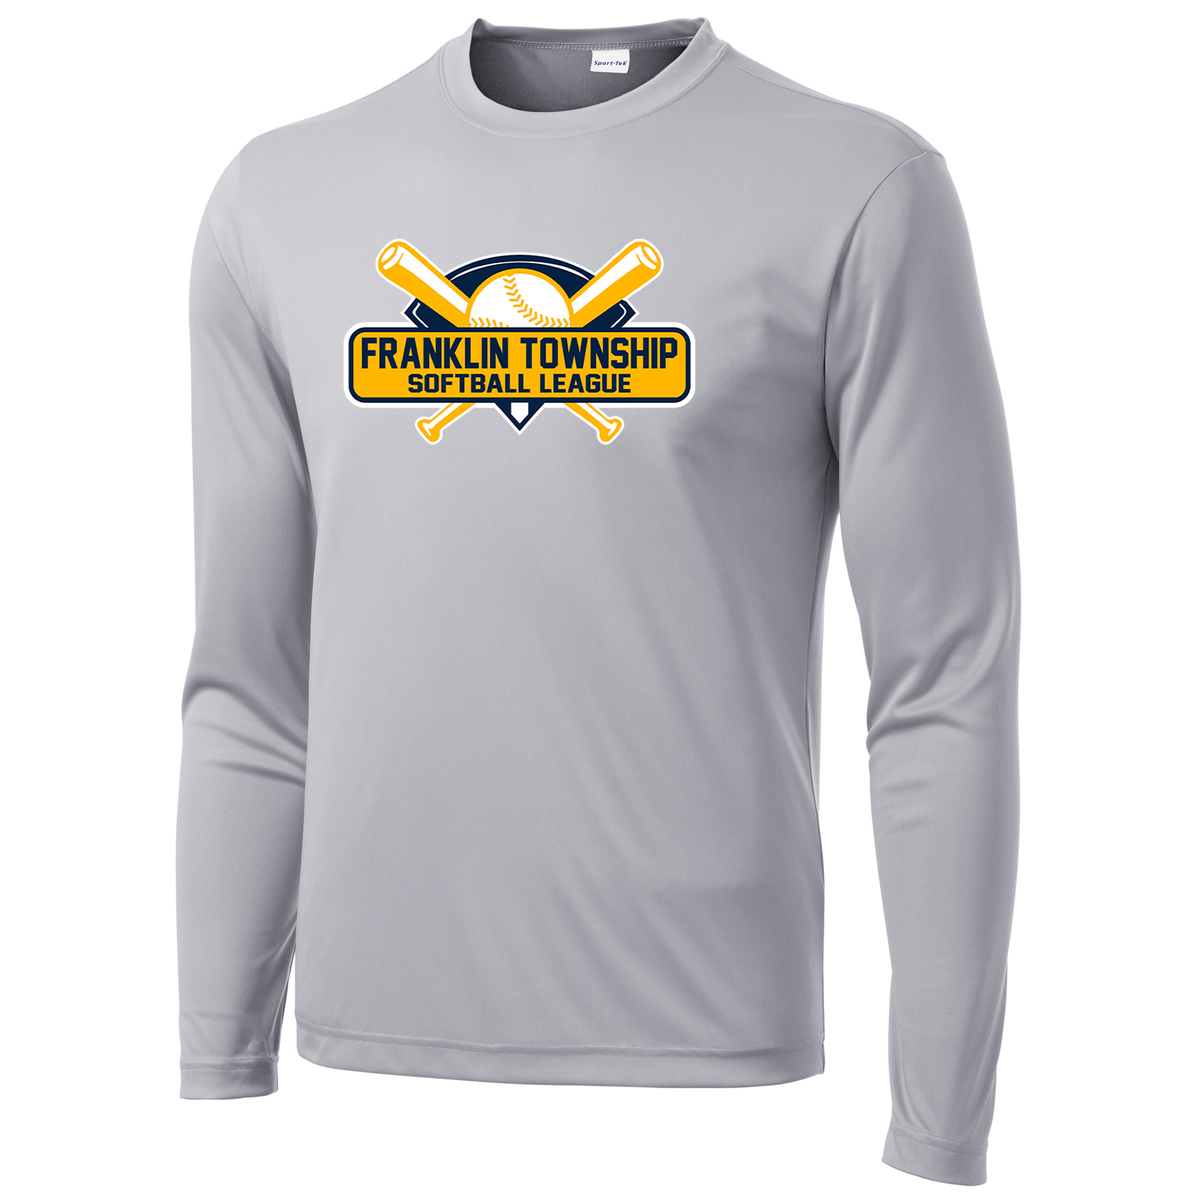 Franklin Township Softball League Long Sleeve Performance Shirt